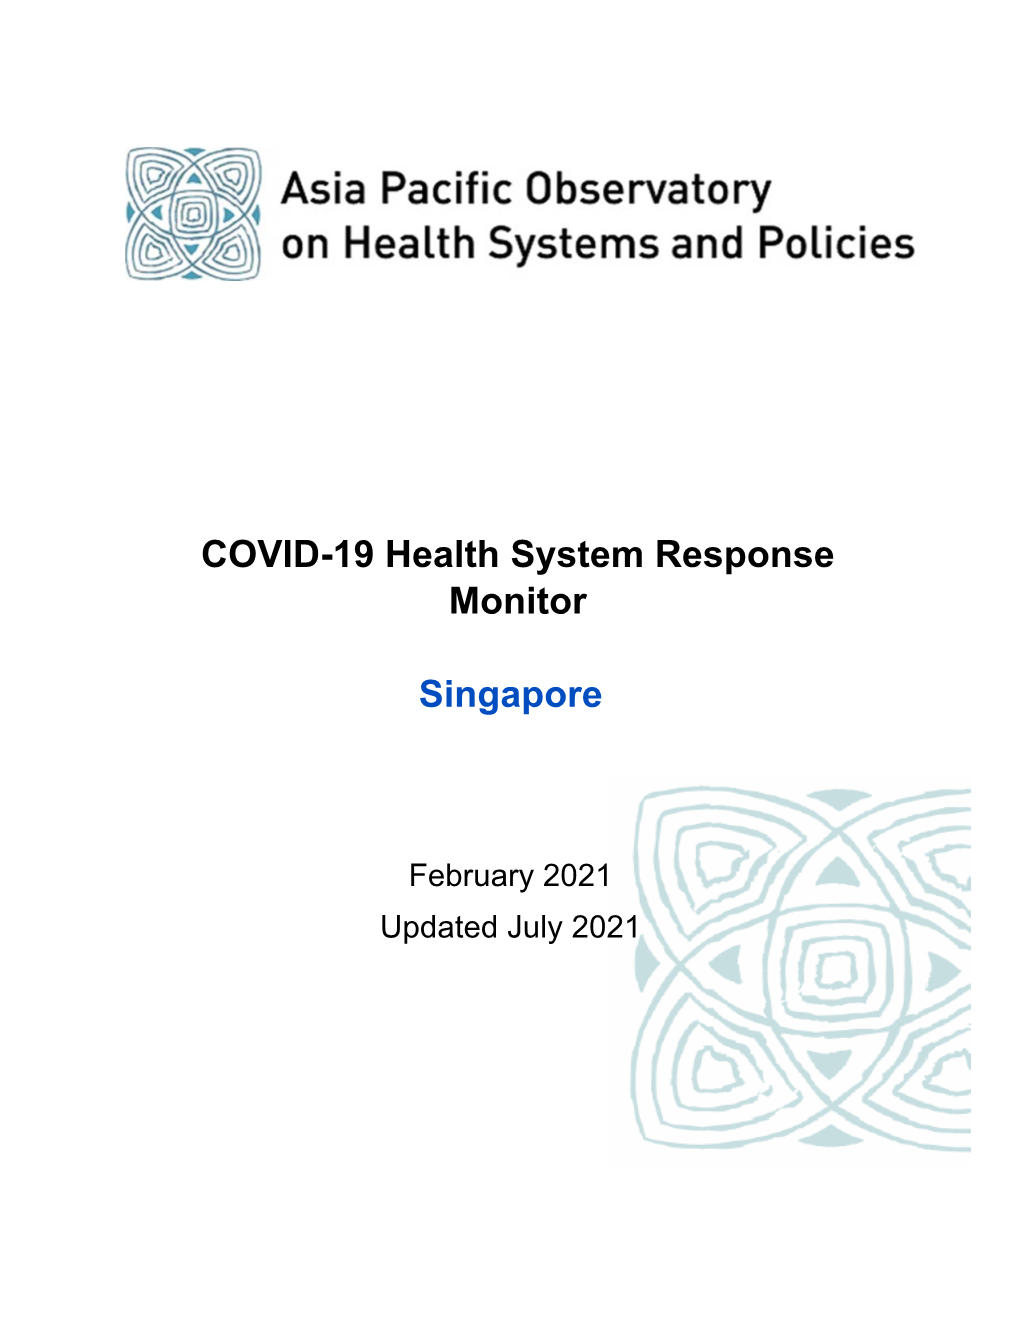 COVID-19 Health System Response Monitor Singapore